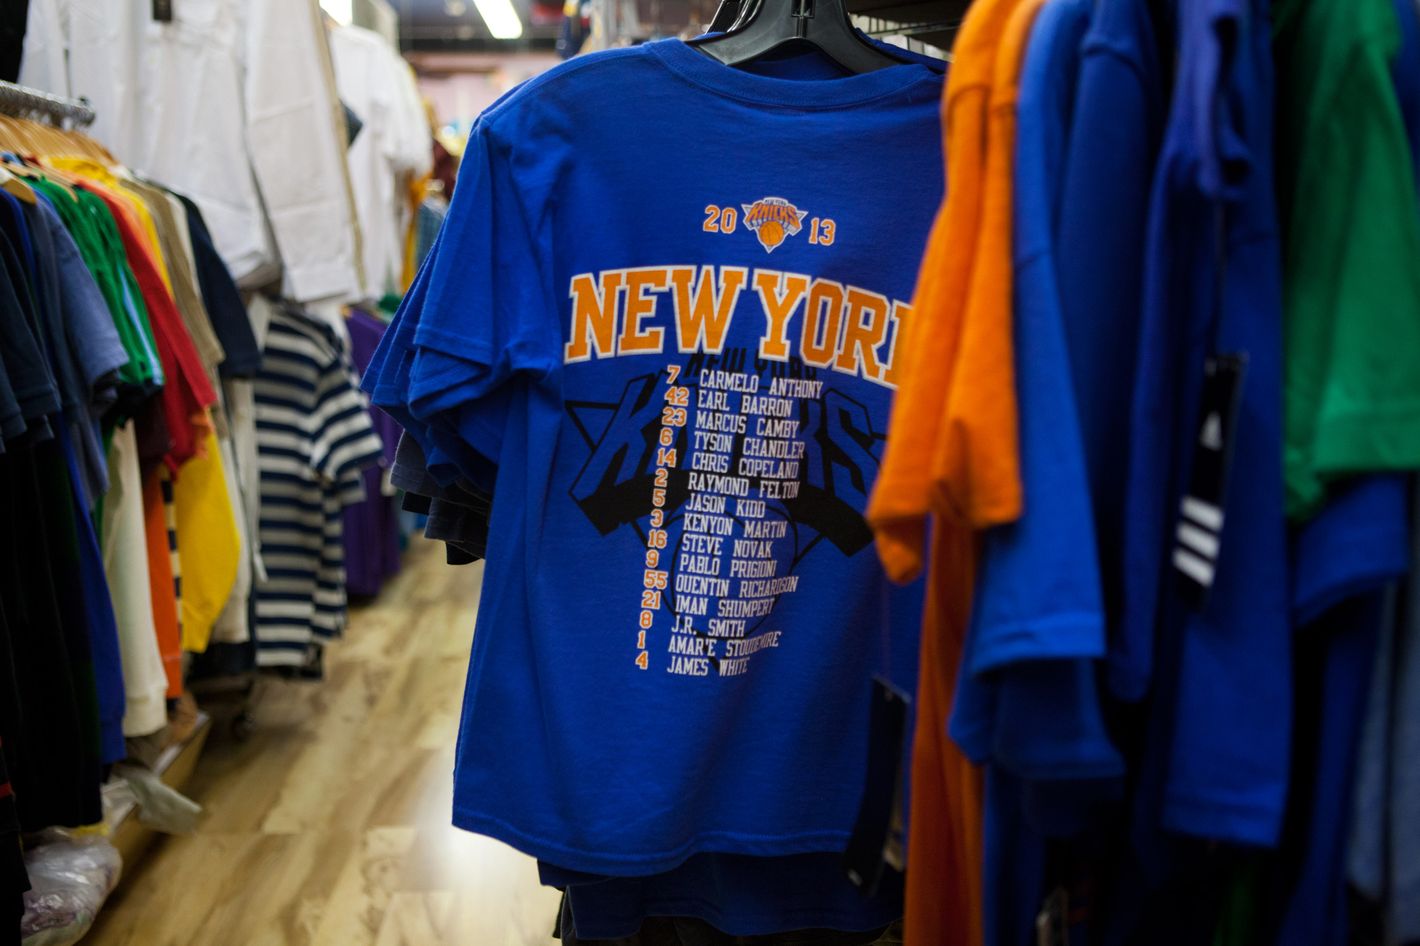 New York Yankees' Jerseys, Modell's Sporting Goods Store Interior